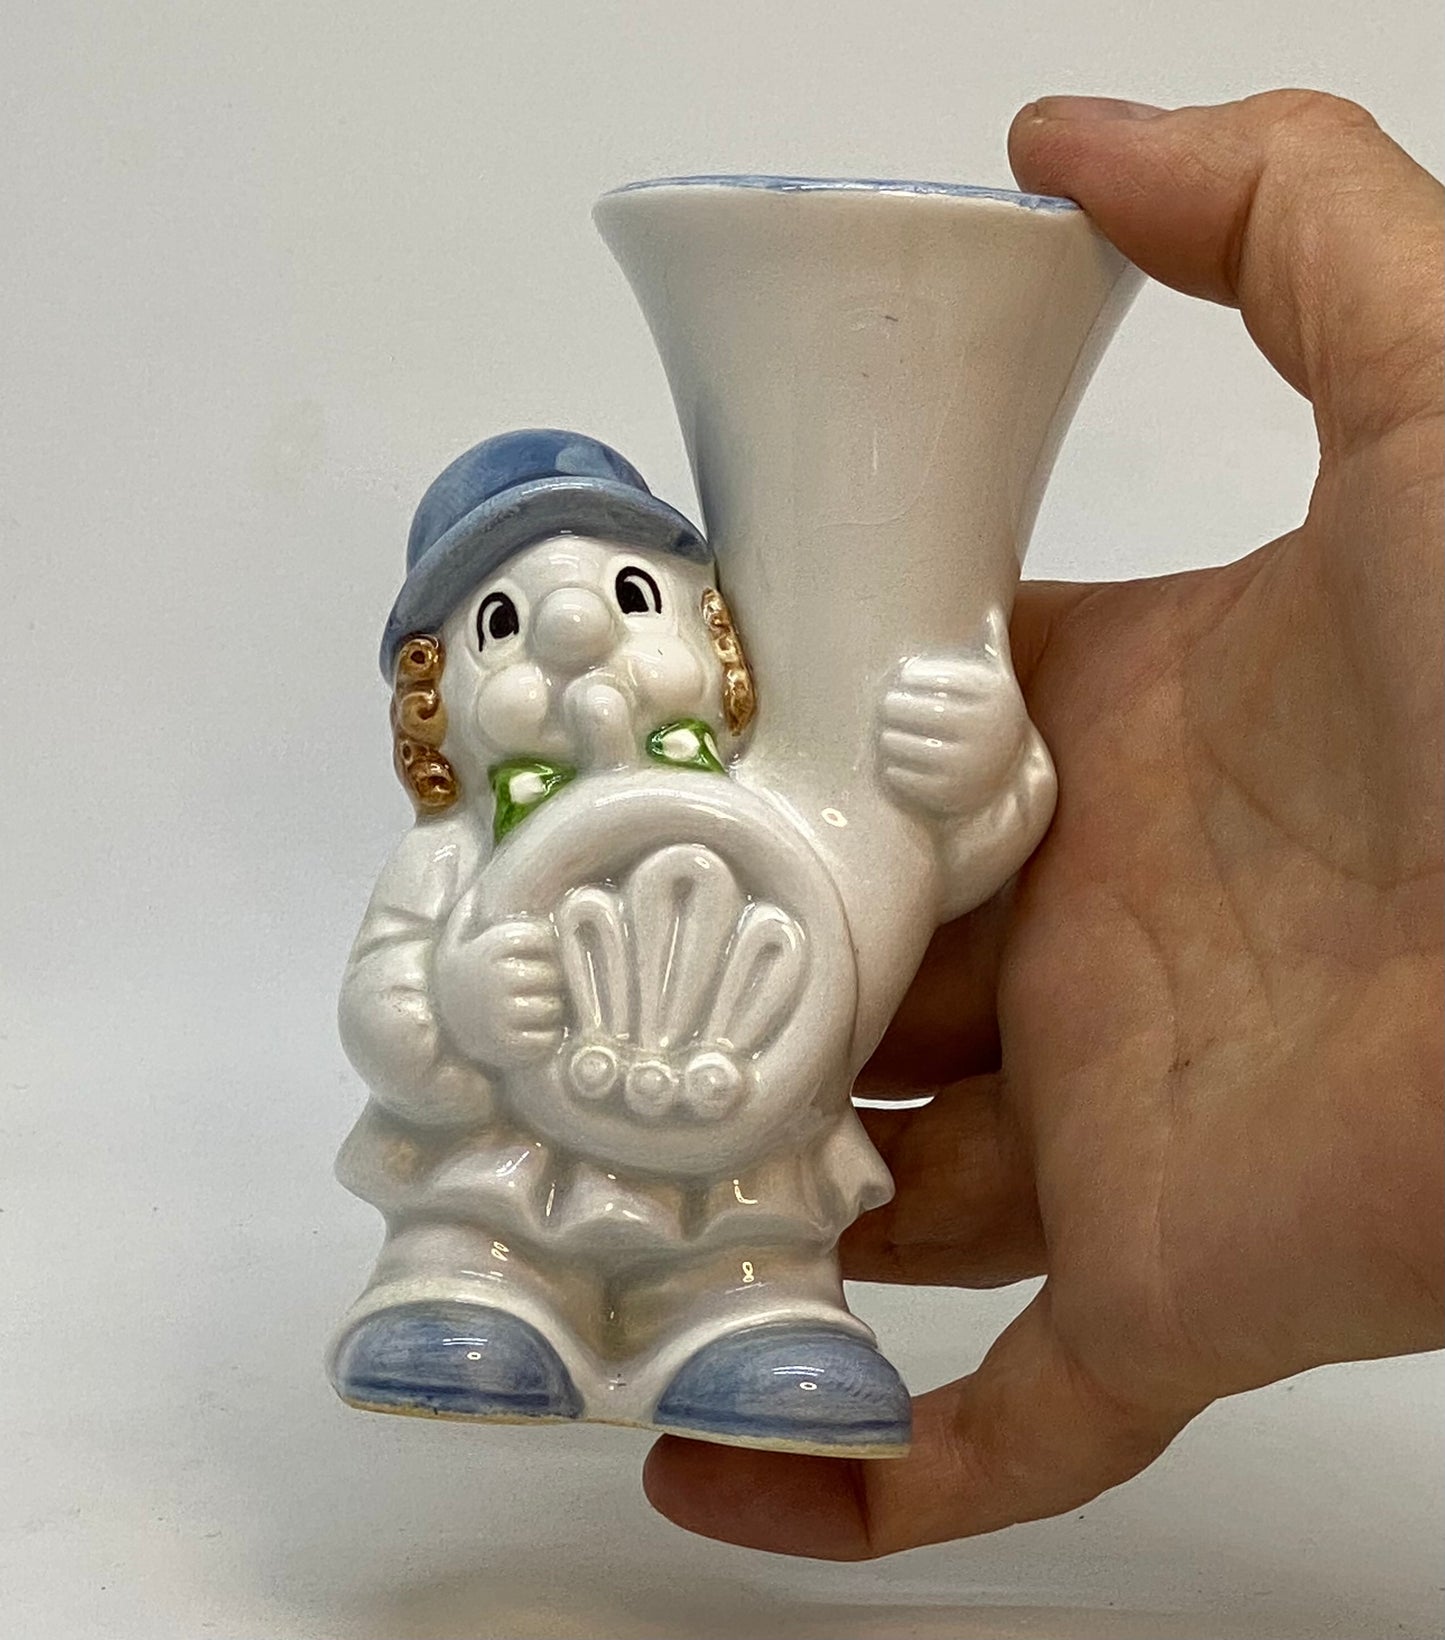 Fitz & Floyd ceramic clown bud vase - 1979